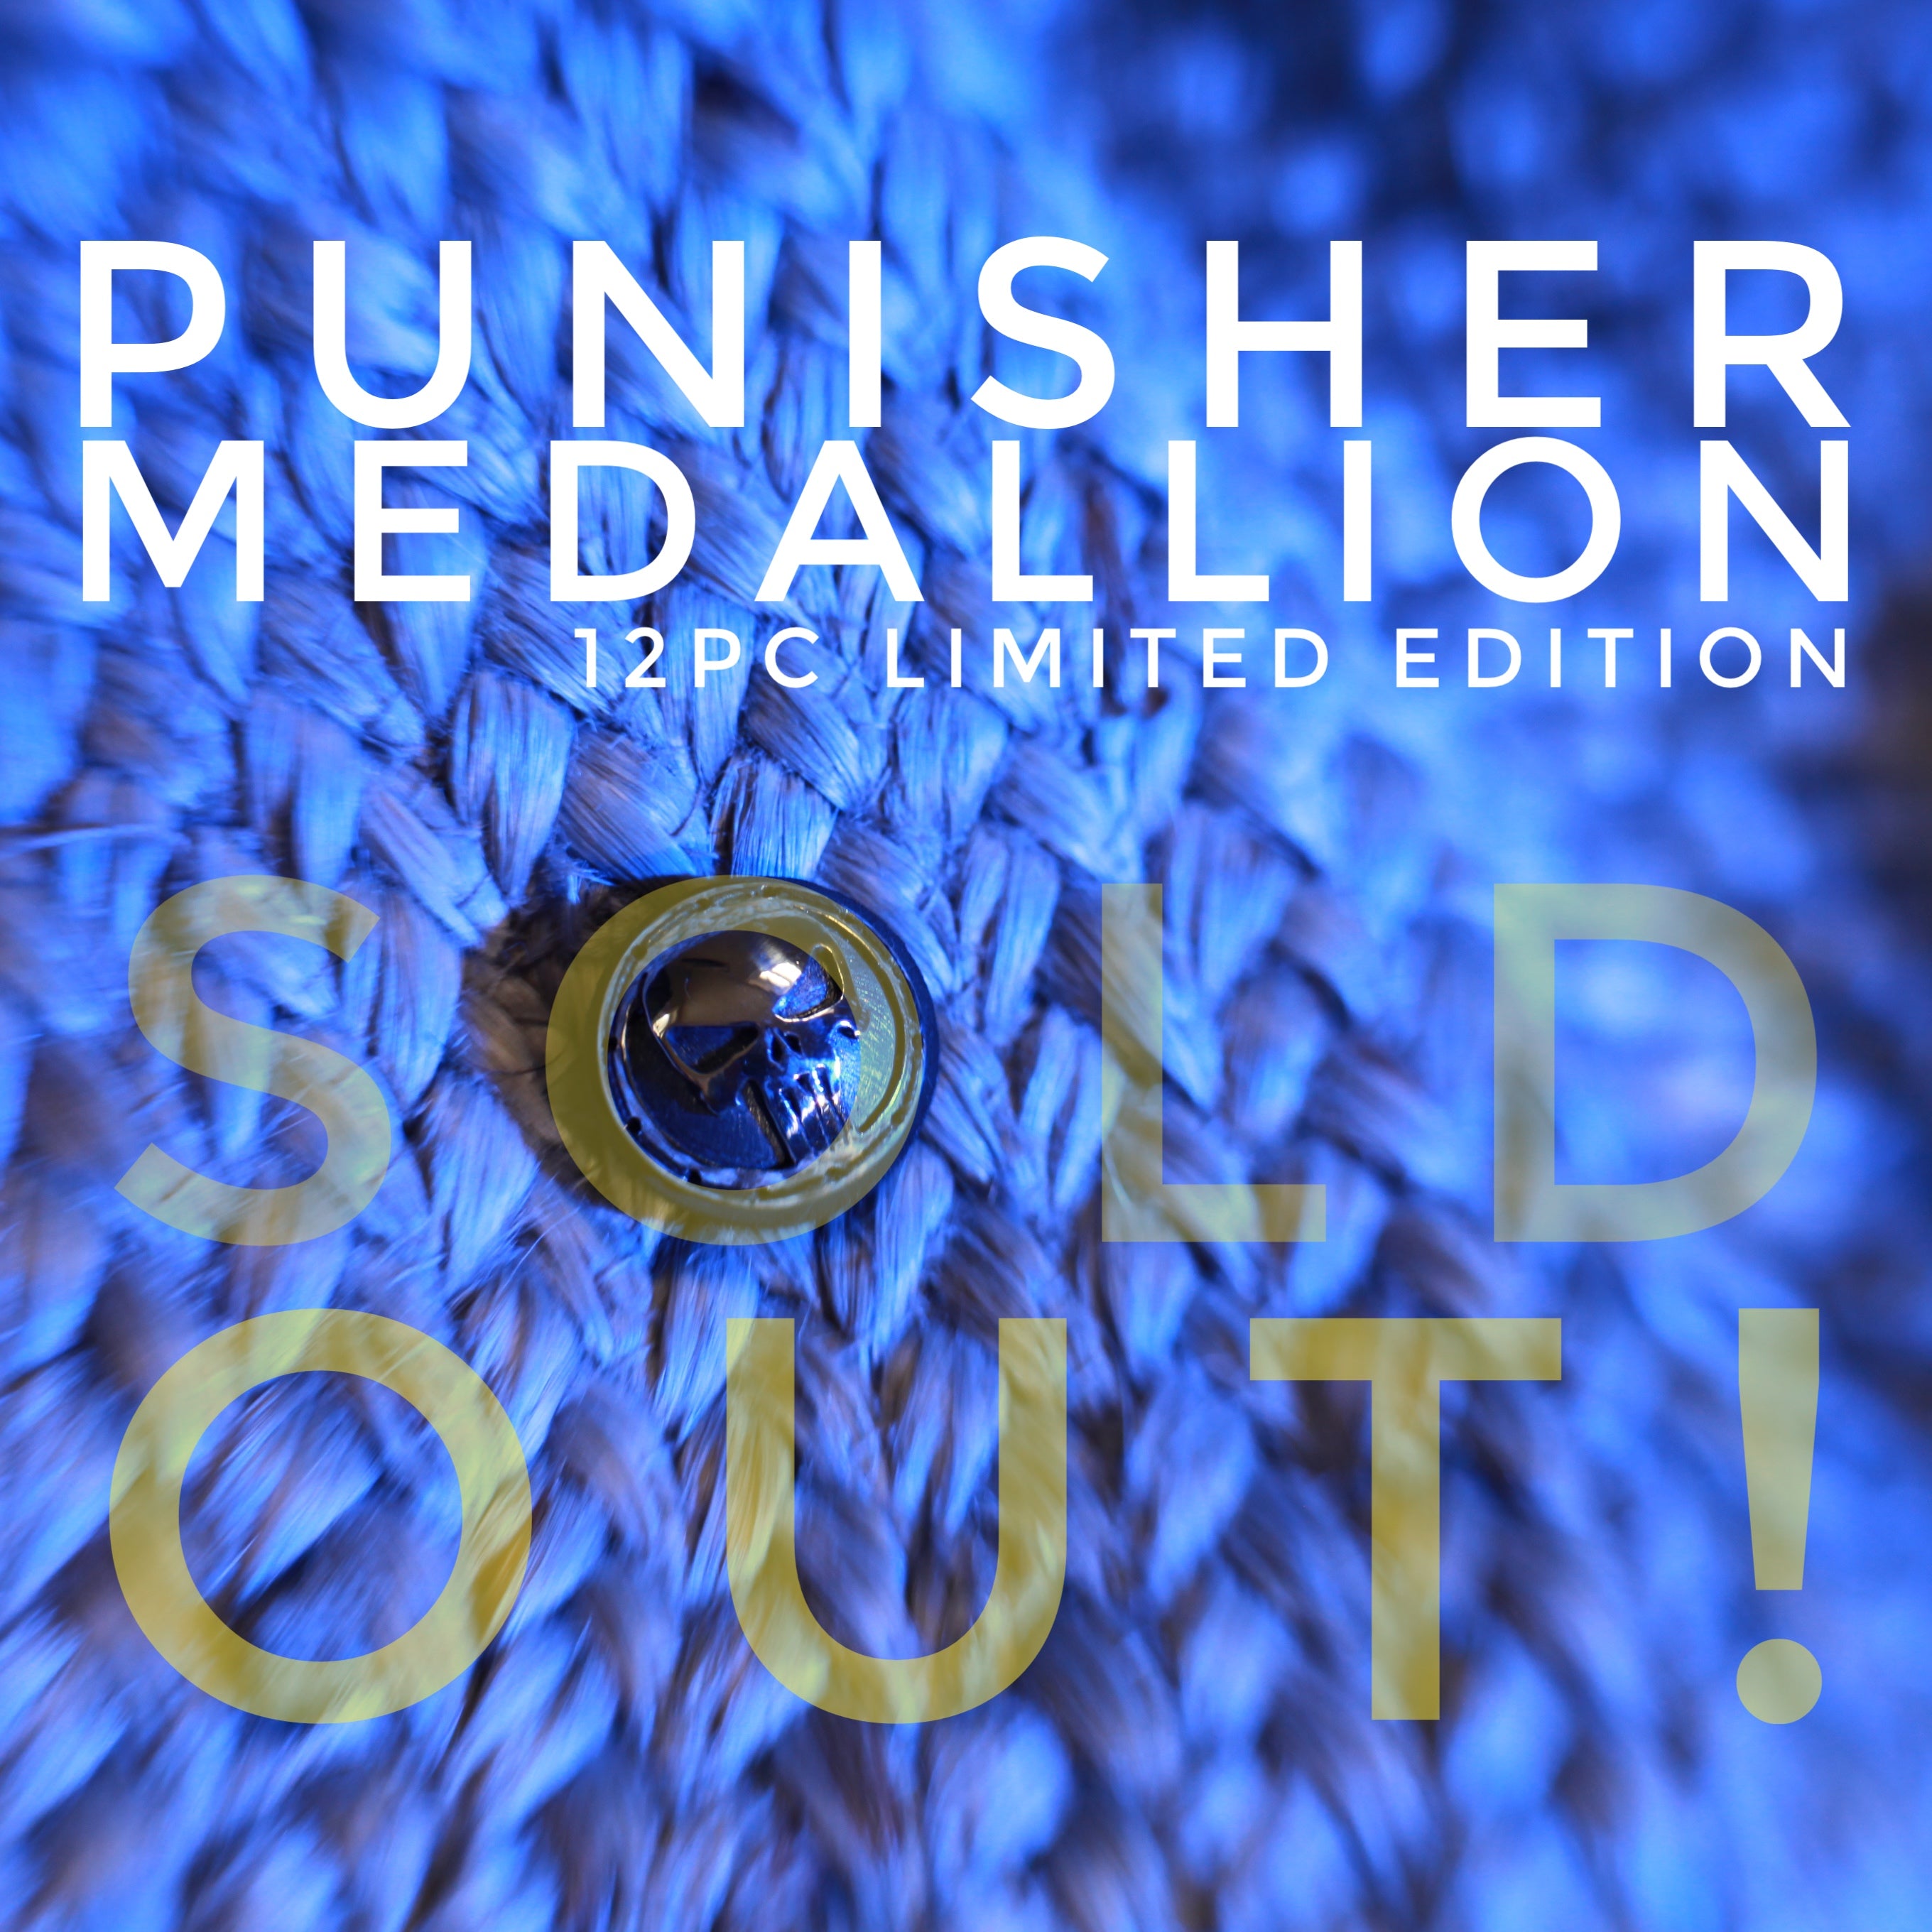 Punisher SE Medallion